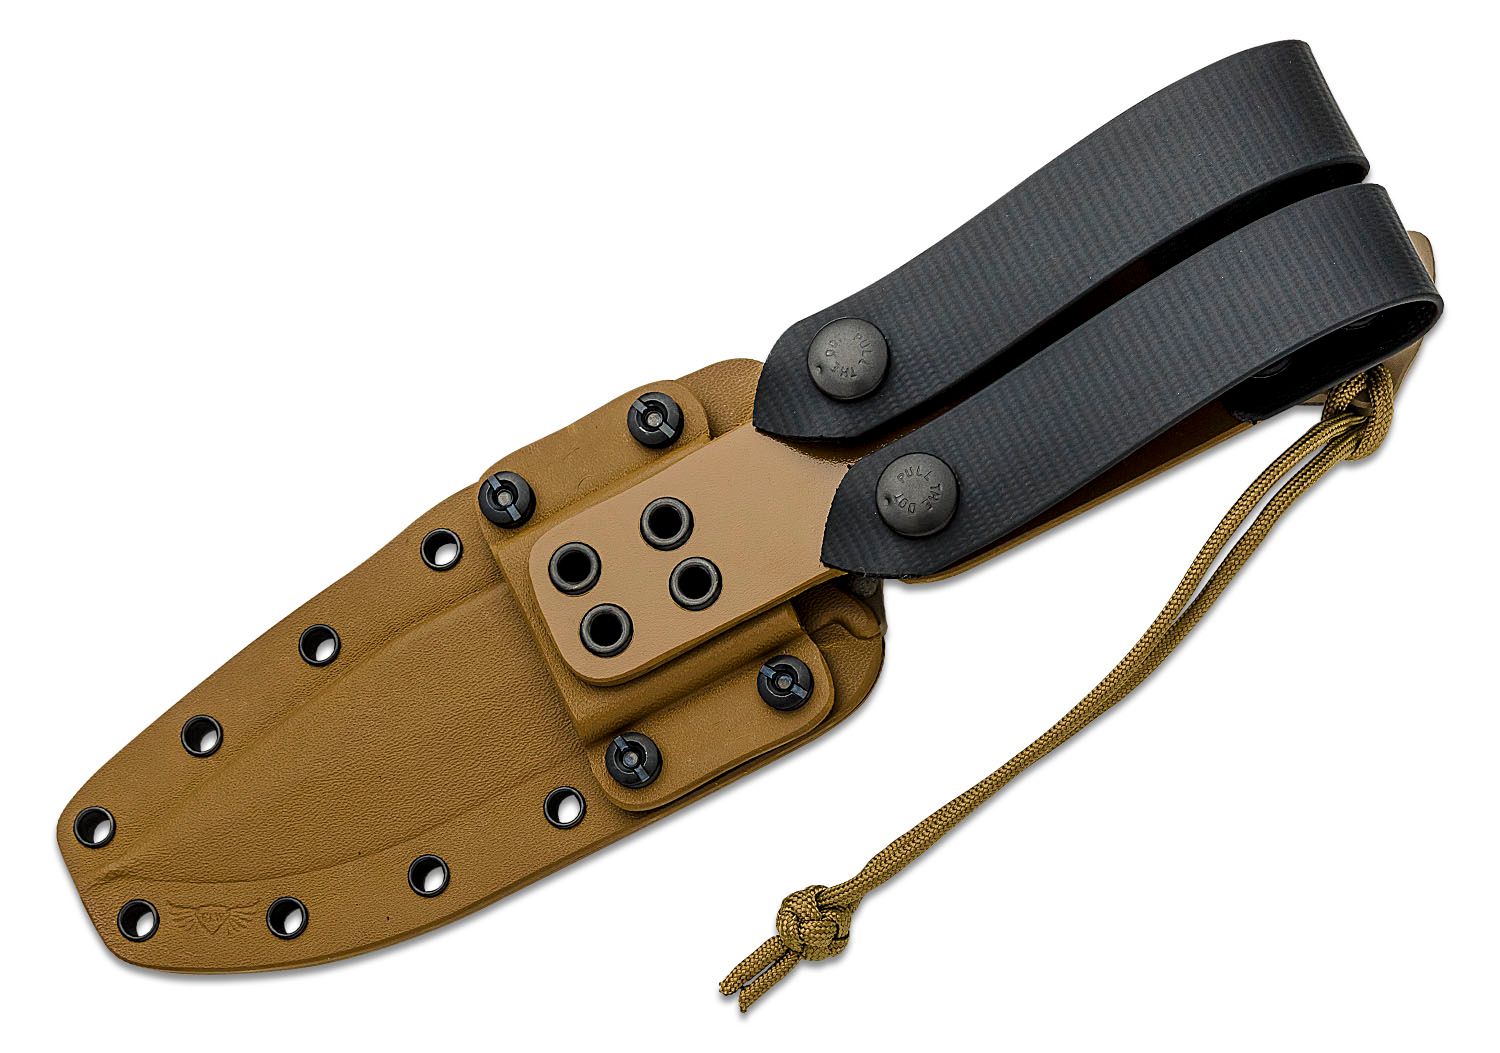 Horkos - Combat / Utility Knife - Pineland Cutlery, Inc dba SPARTAN BLADES